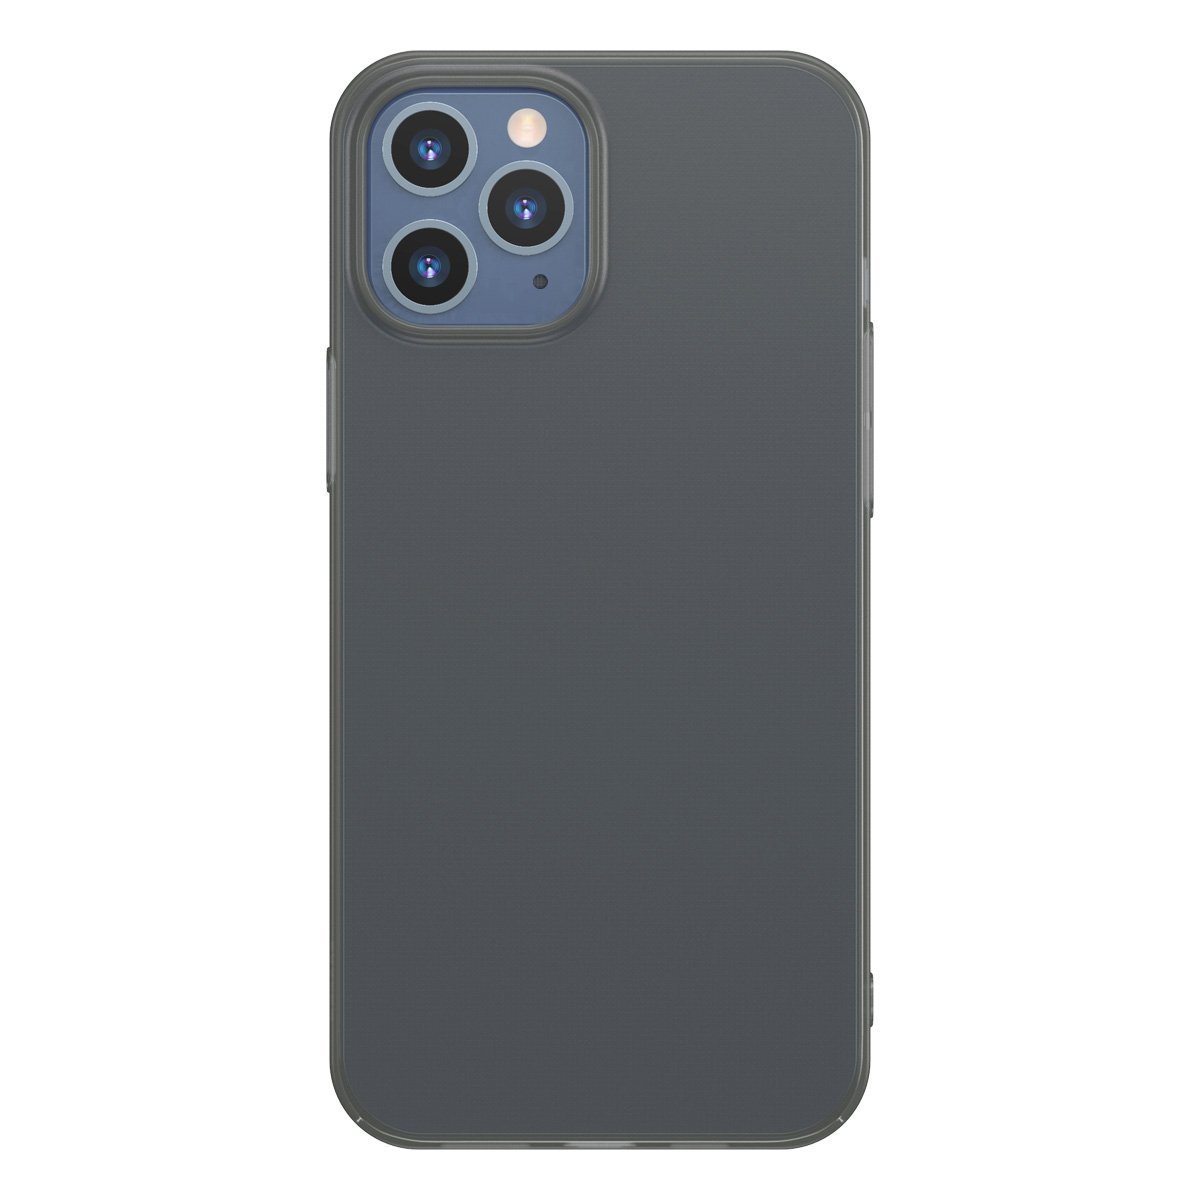 Husa Apple iPhone 12 Pro Max, Baseus Comfort Case, Negru, 6.7 inch imagine